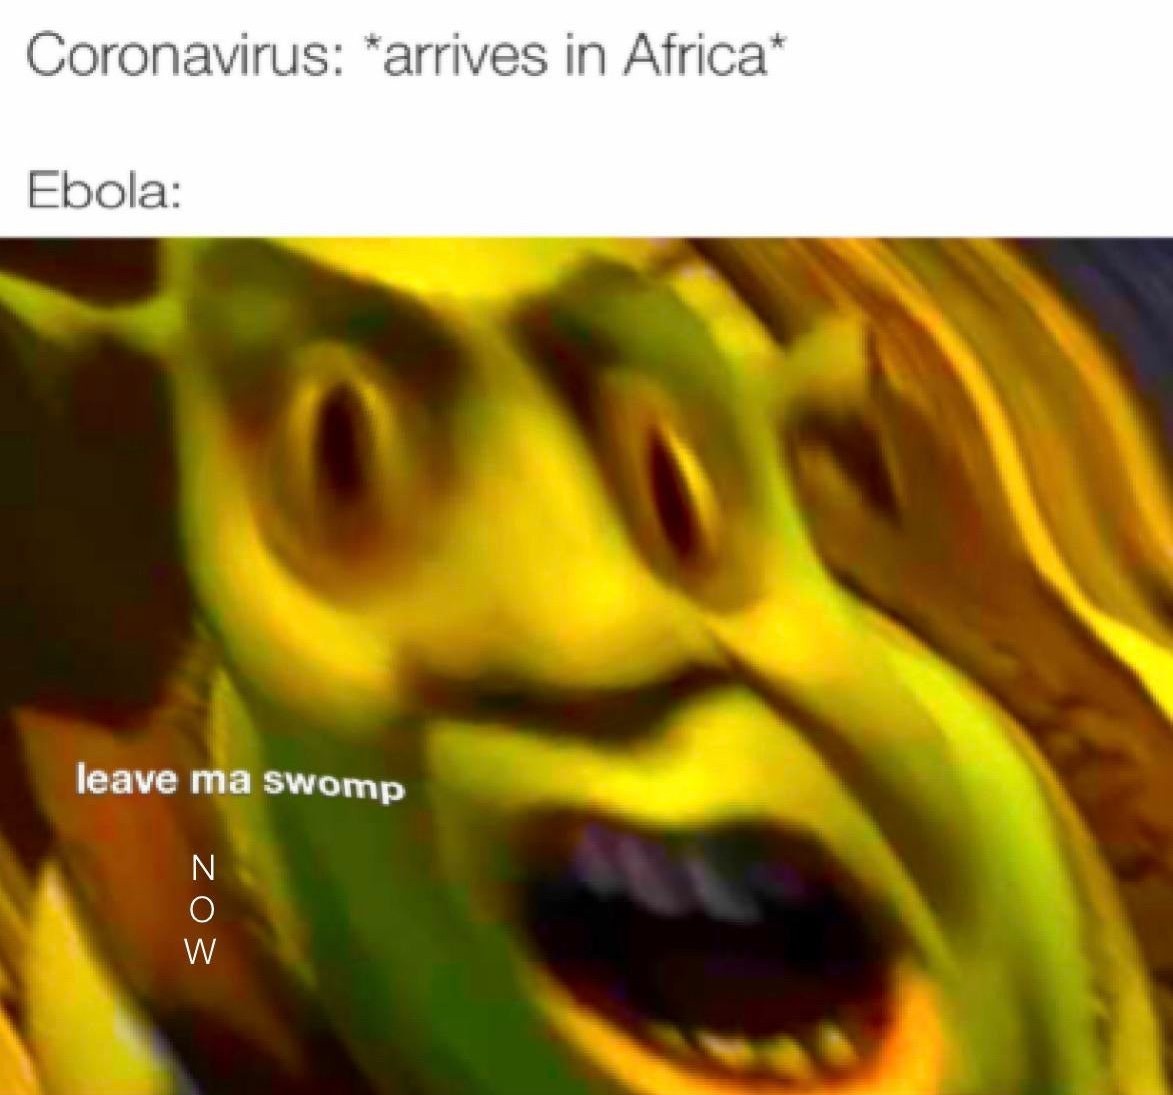 Coronavirus - meme